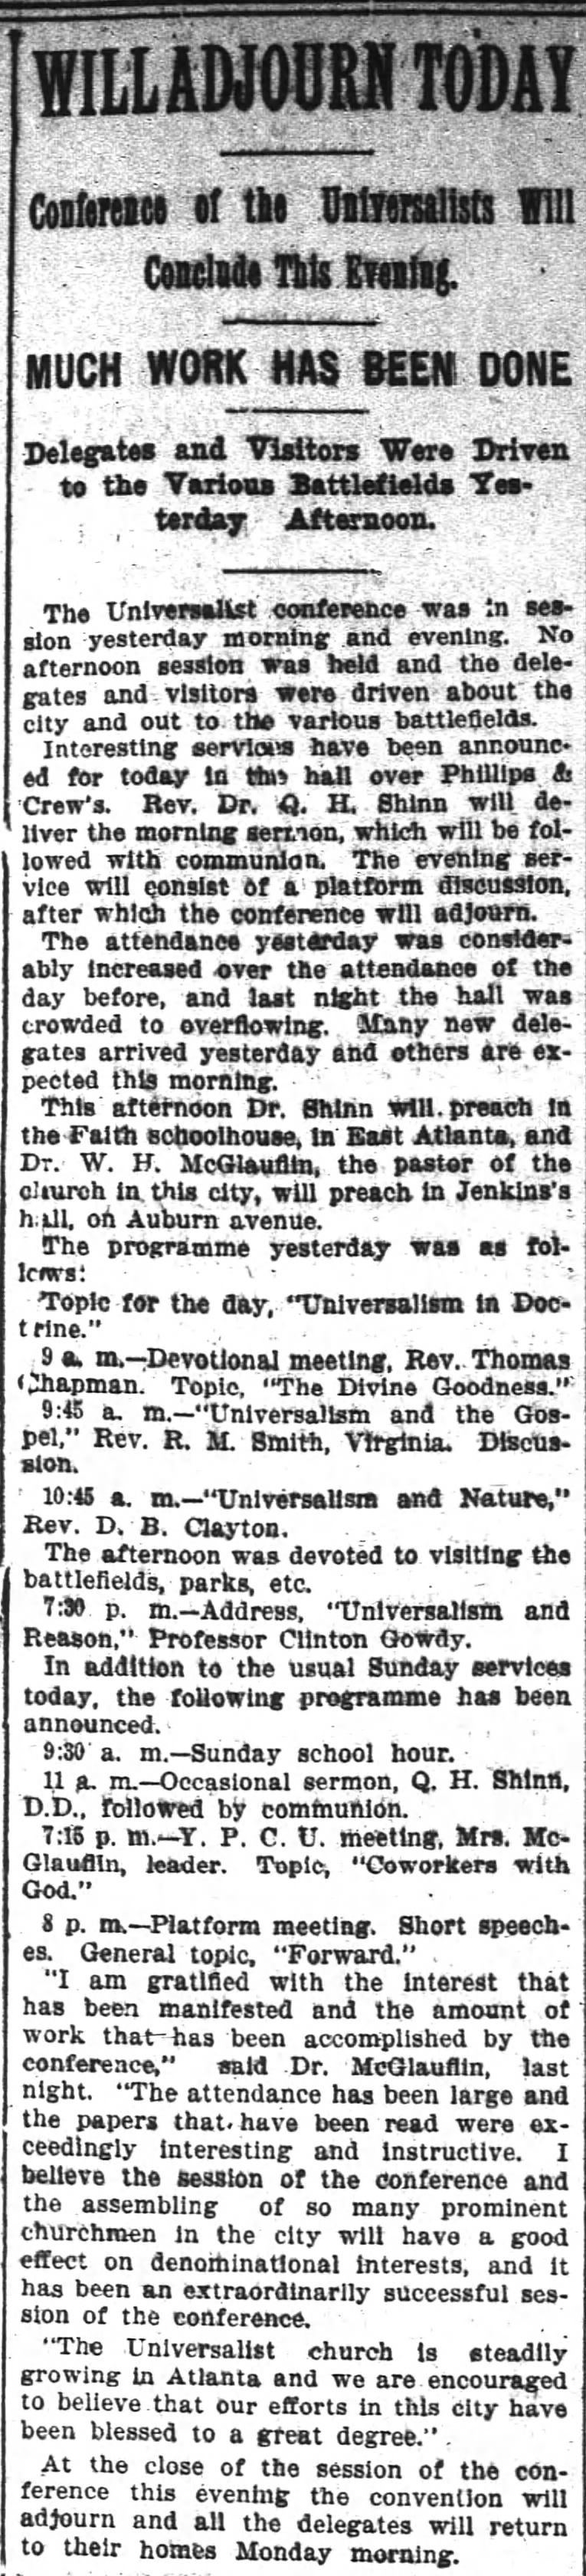 1896.10.25 Universalist Conference Concludes